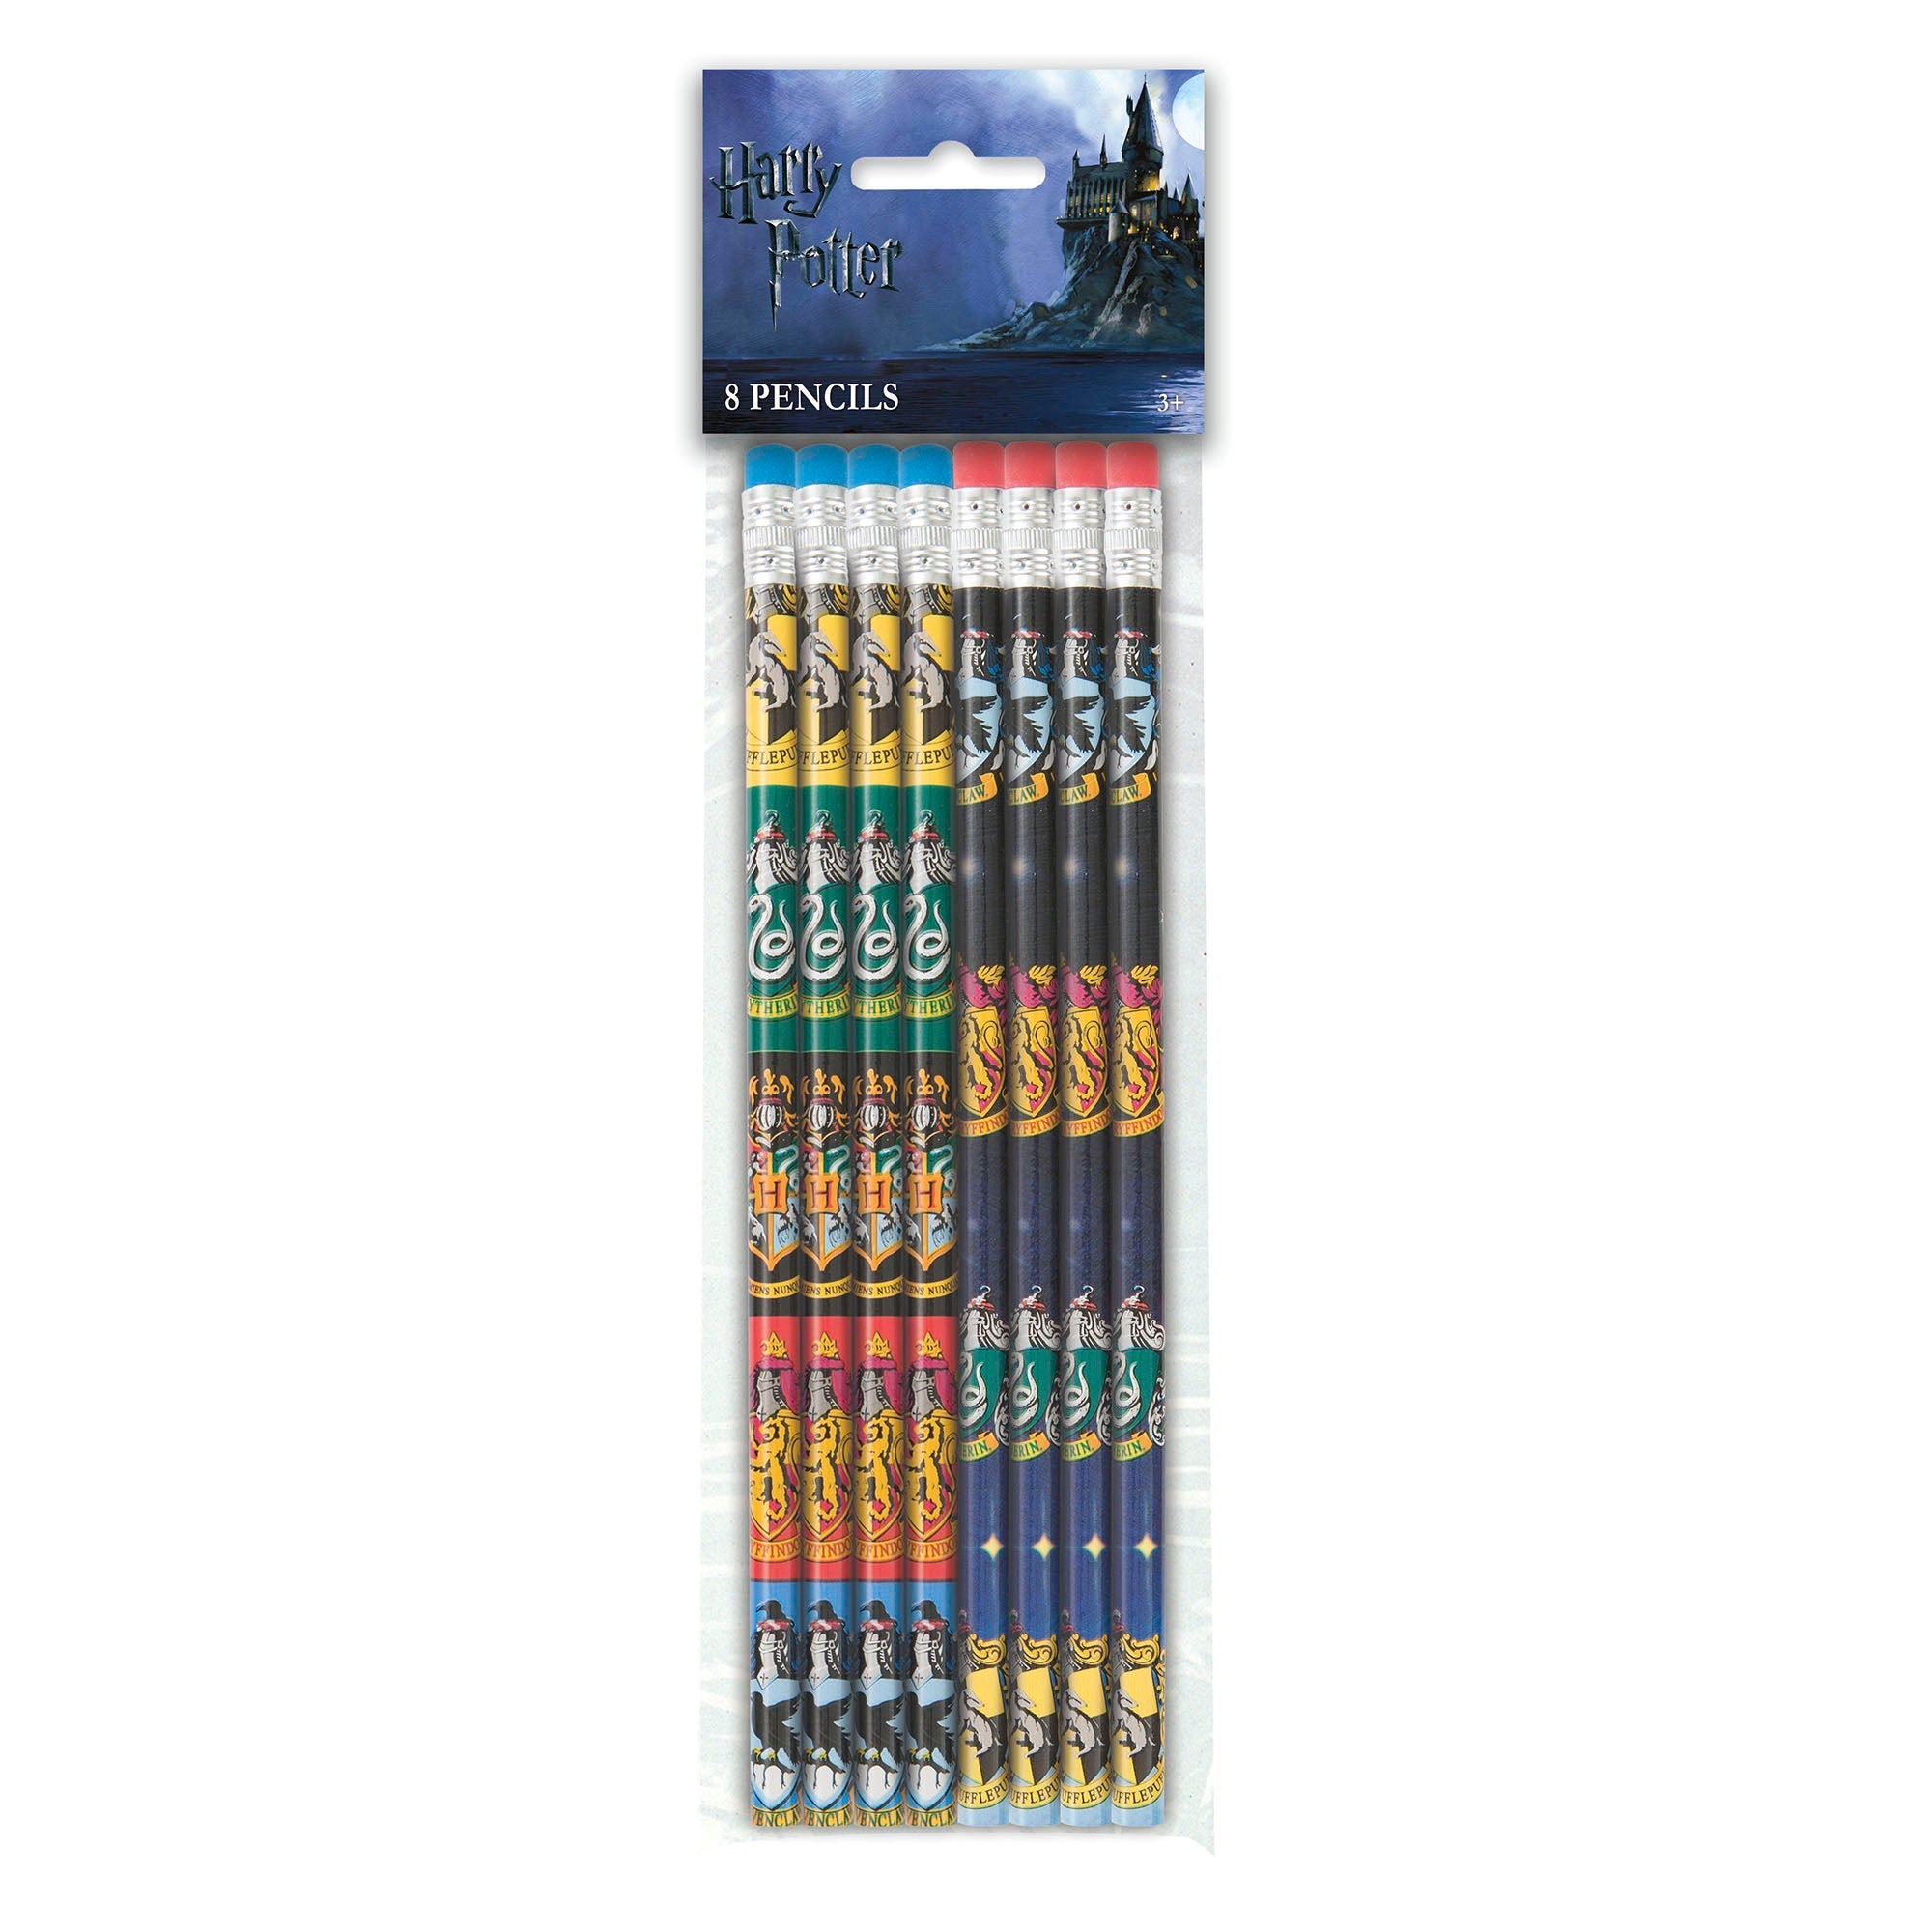 Harry Potter 8 Pencils